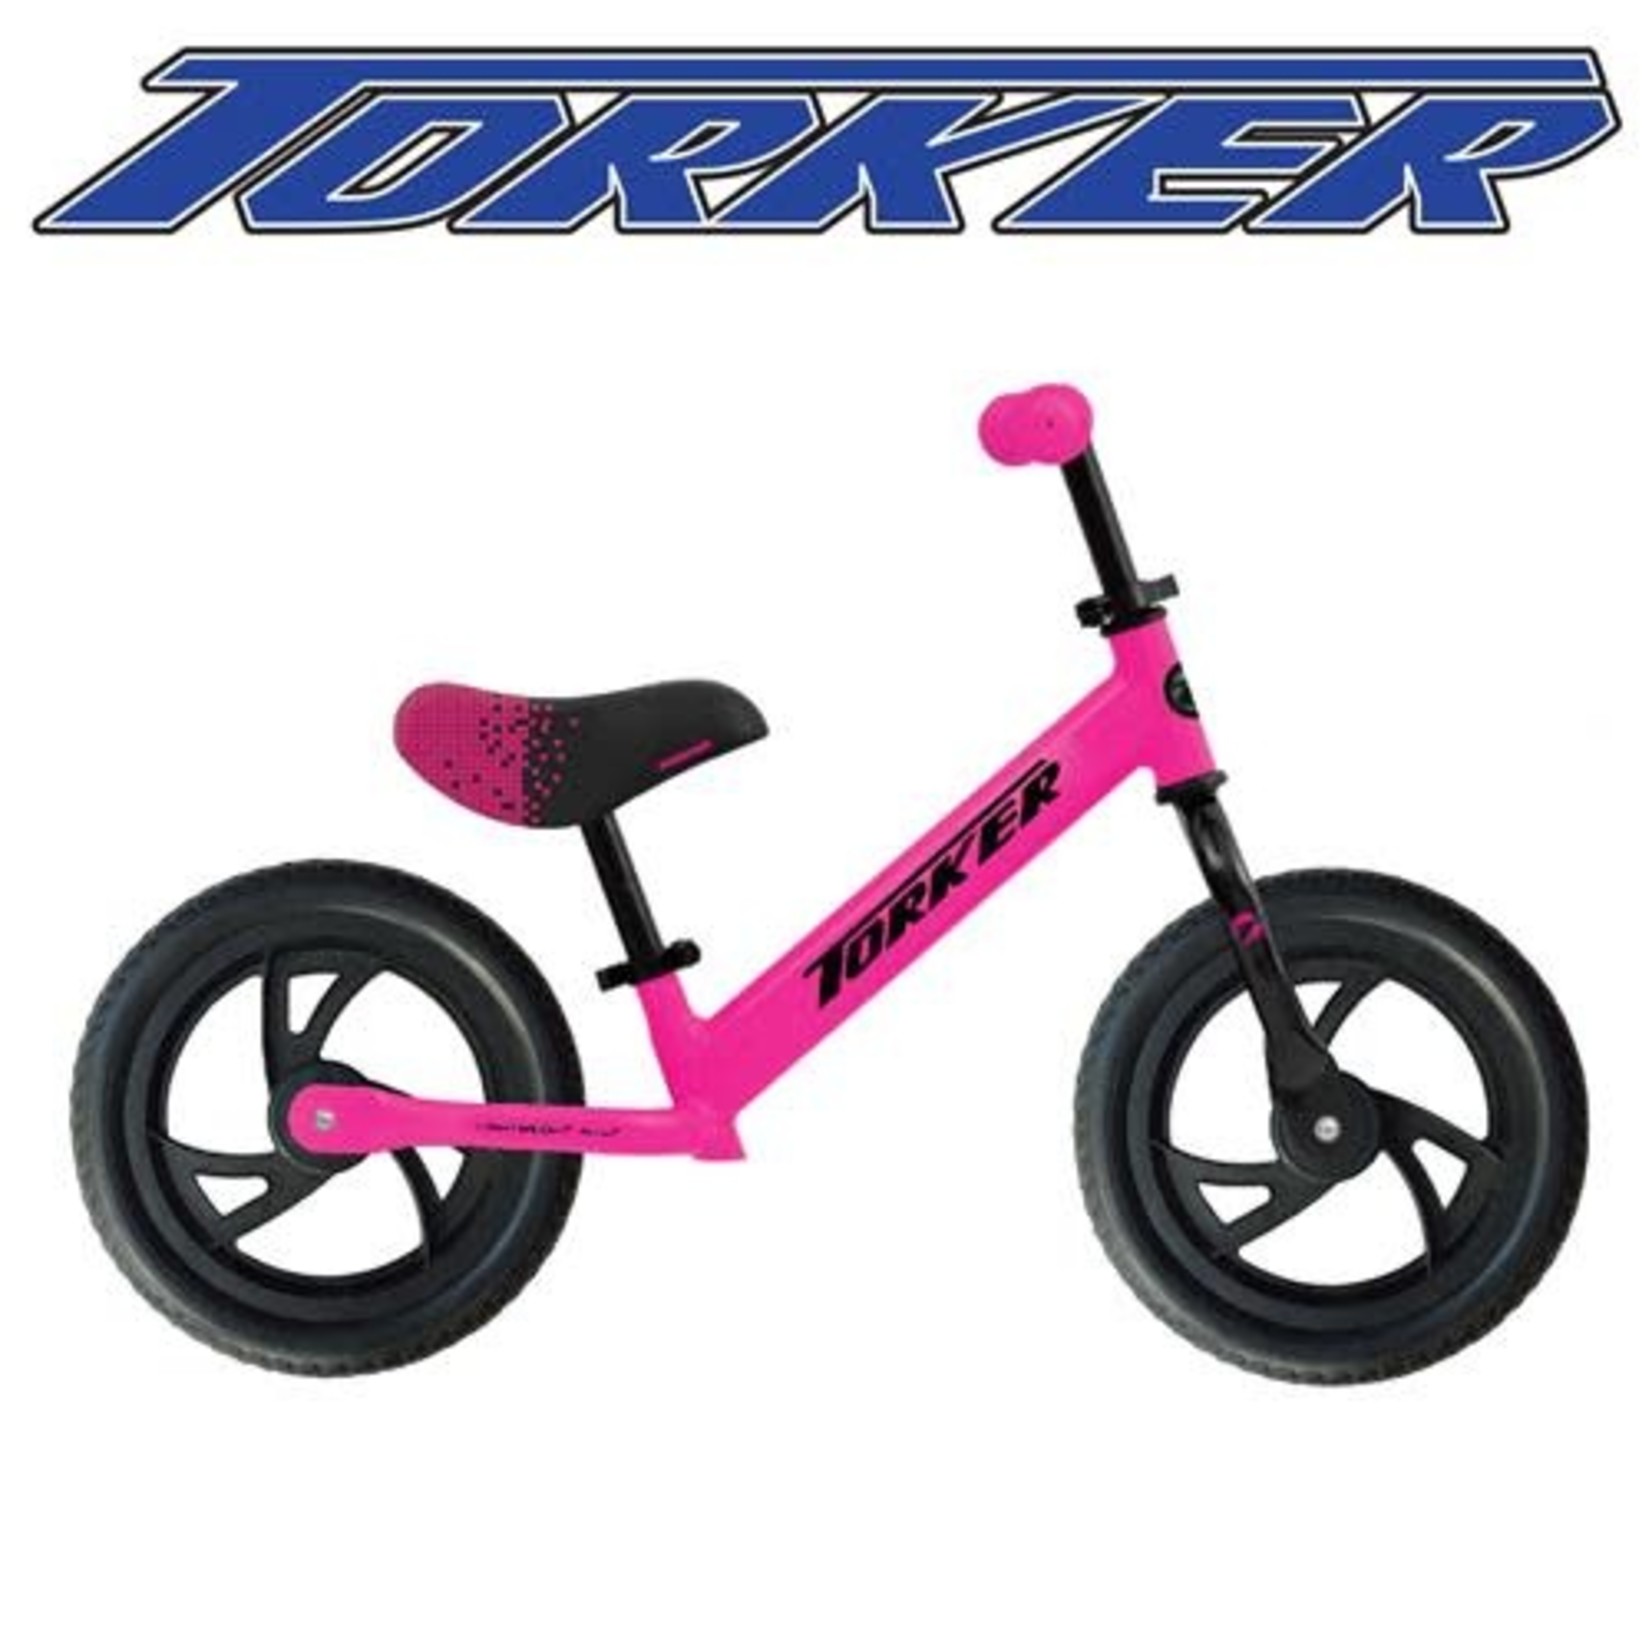 Torker Torker Kid Balance Bike Wheels Suit Children 18 Months-5 Years - Pink With Black